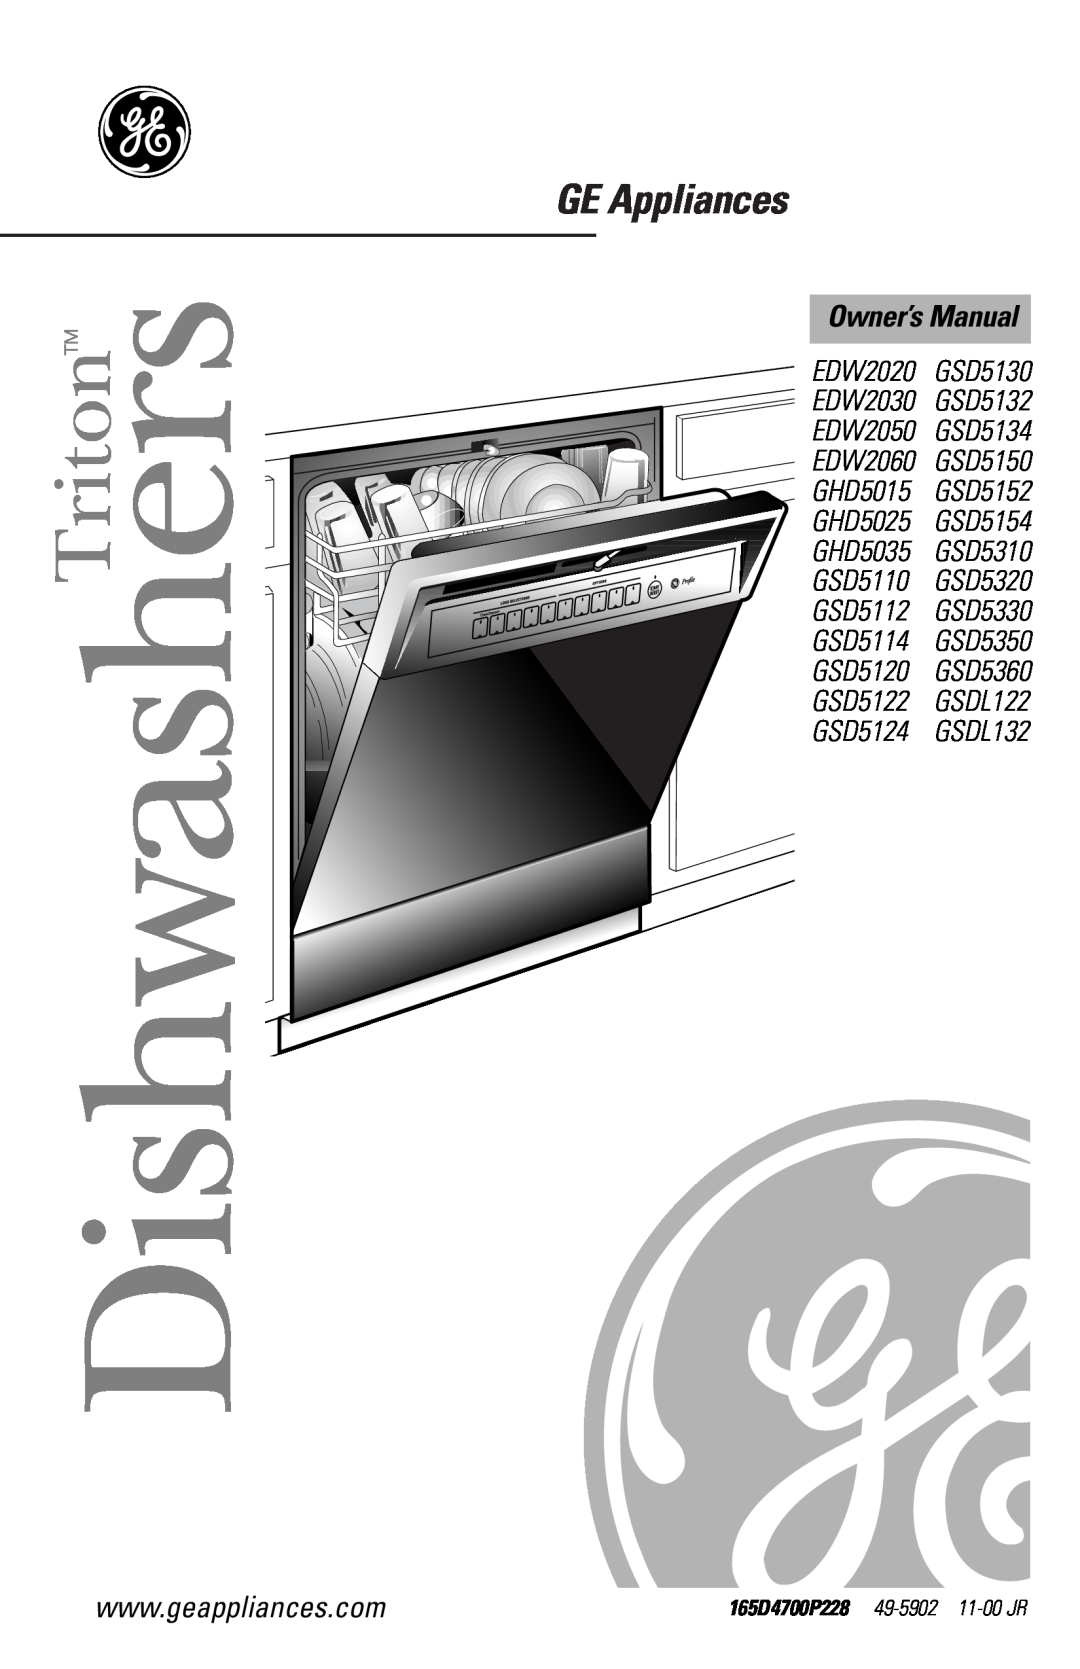 GE GSD5360 owner manual GE Appliances, GE Answer Center, EDW2020 EDW2030 EDW2050 EDW2060 GSD5110 GSD5112, Dishwashers 